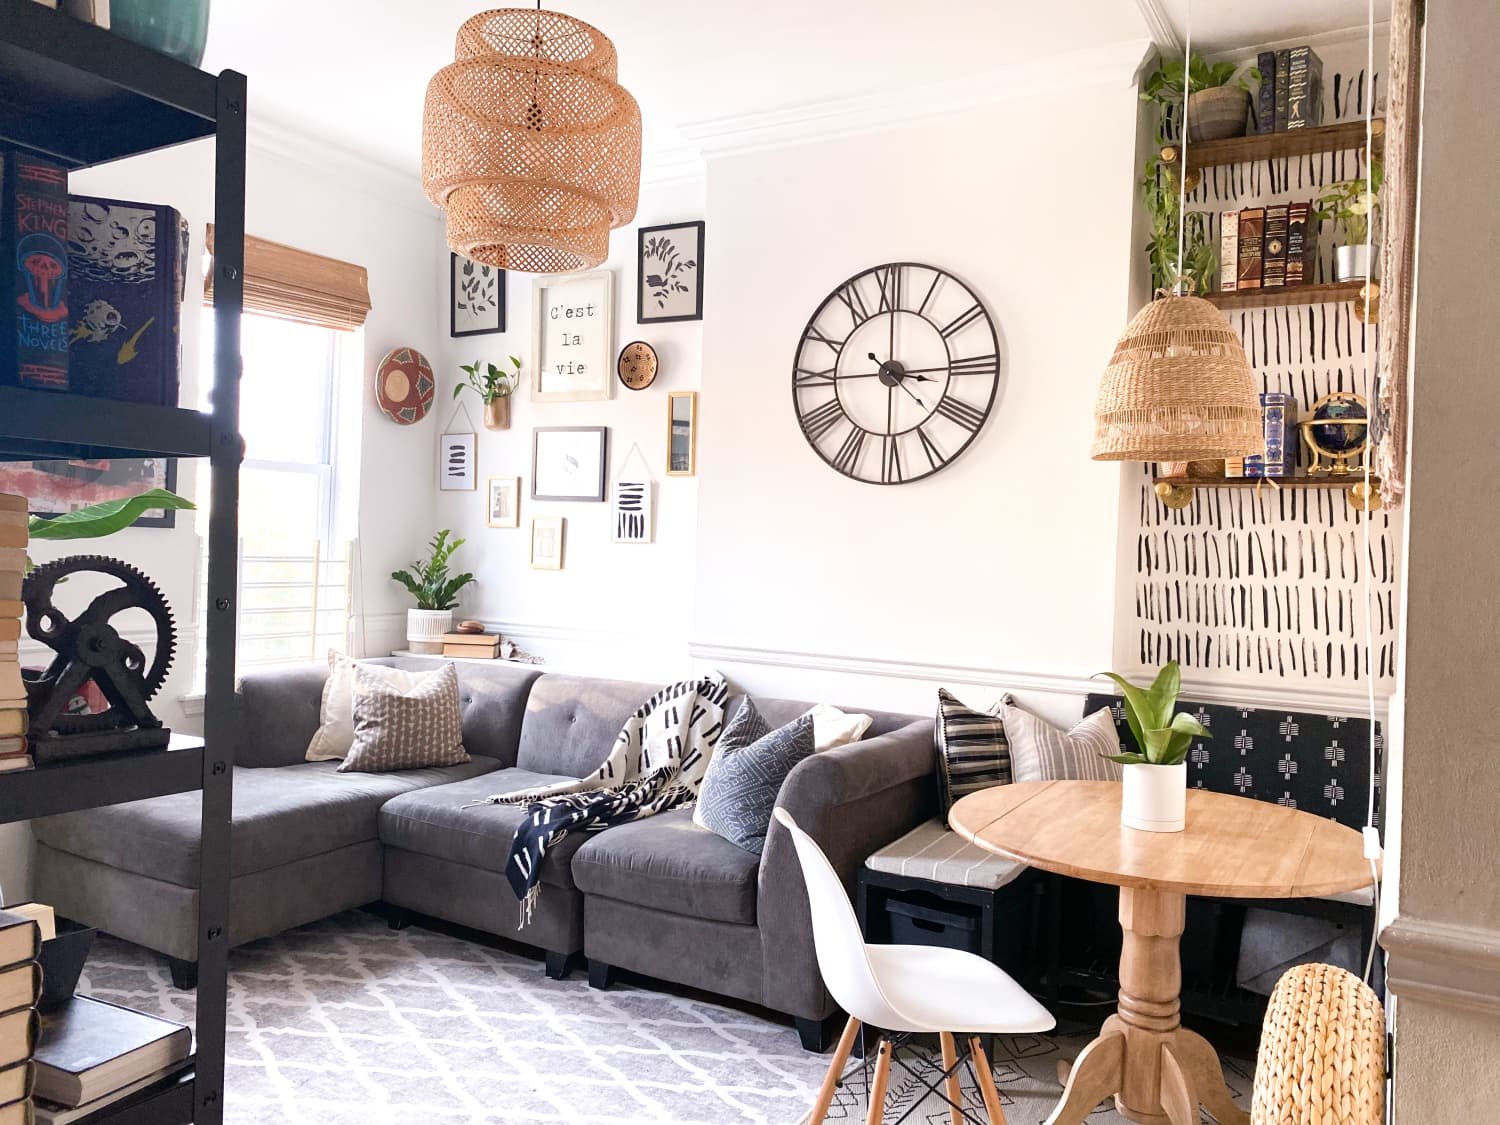 This Design Expert’s Organized 750-Square-Foot Rental Apartment Is Full of Brilliant Hidden Storage